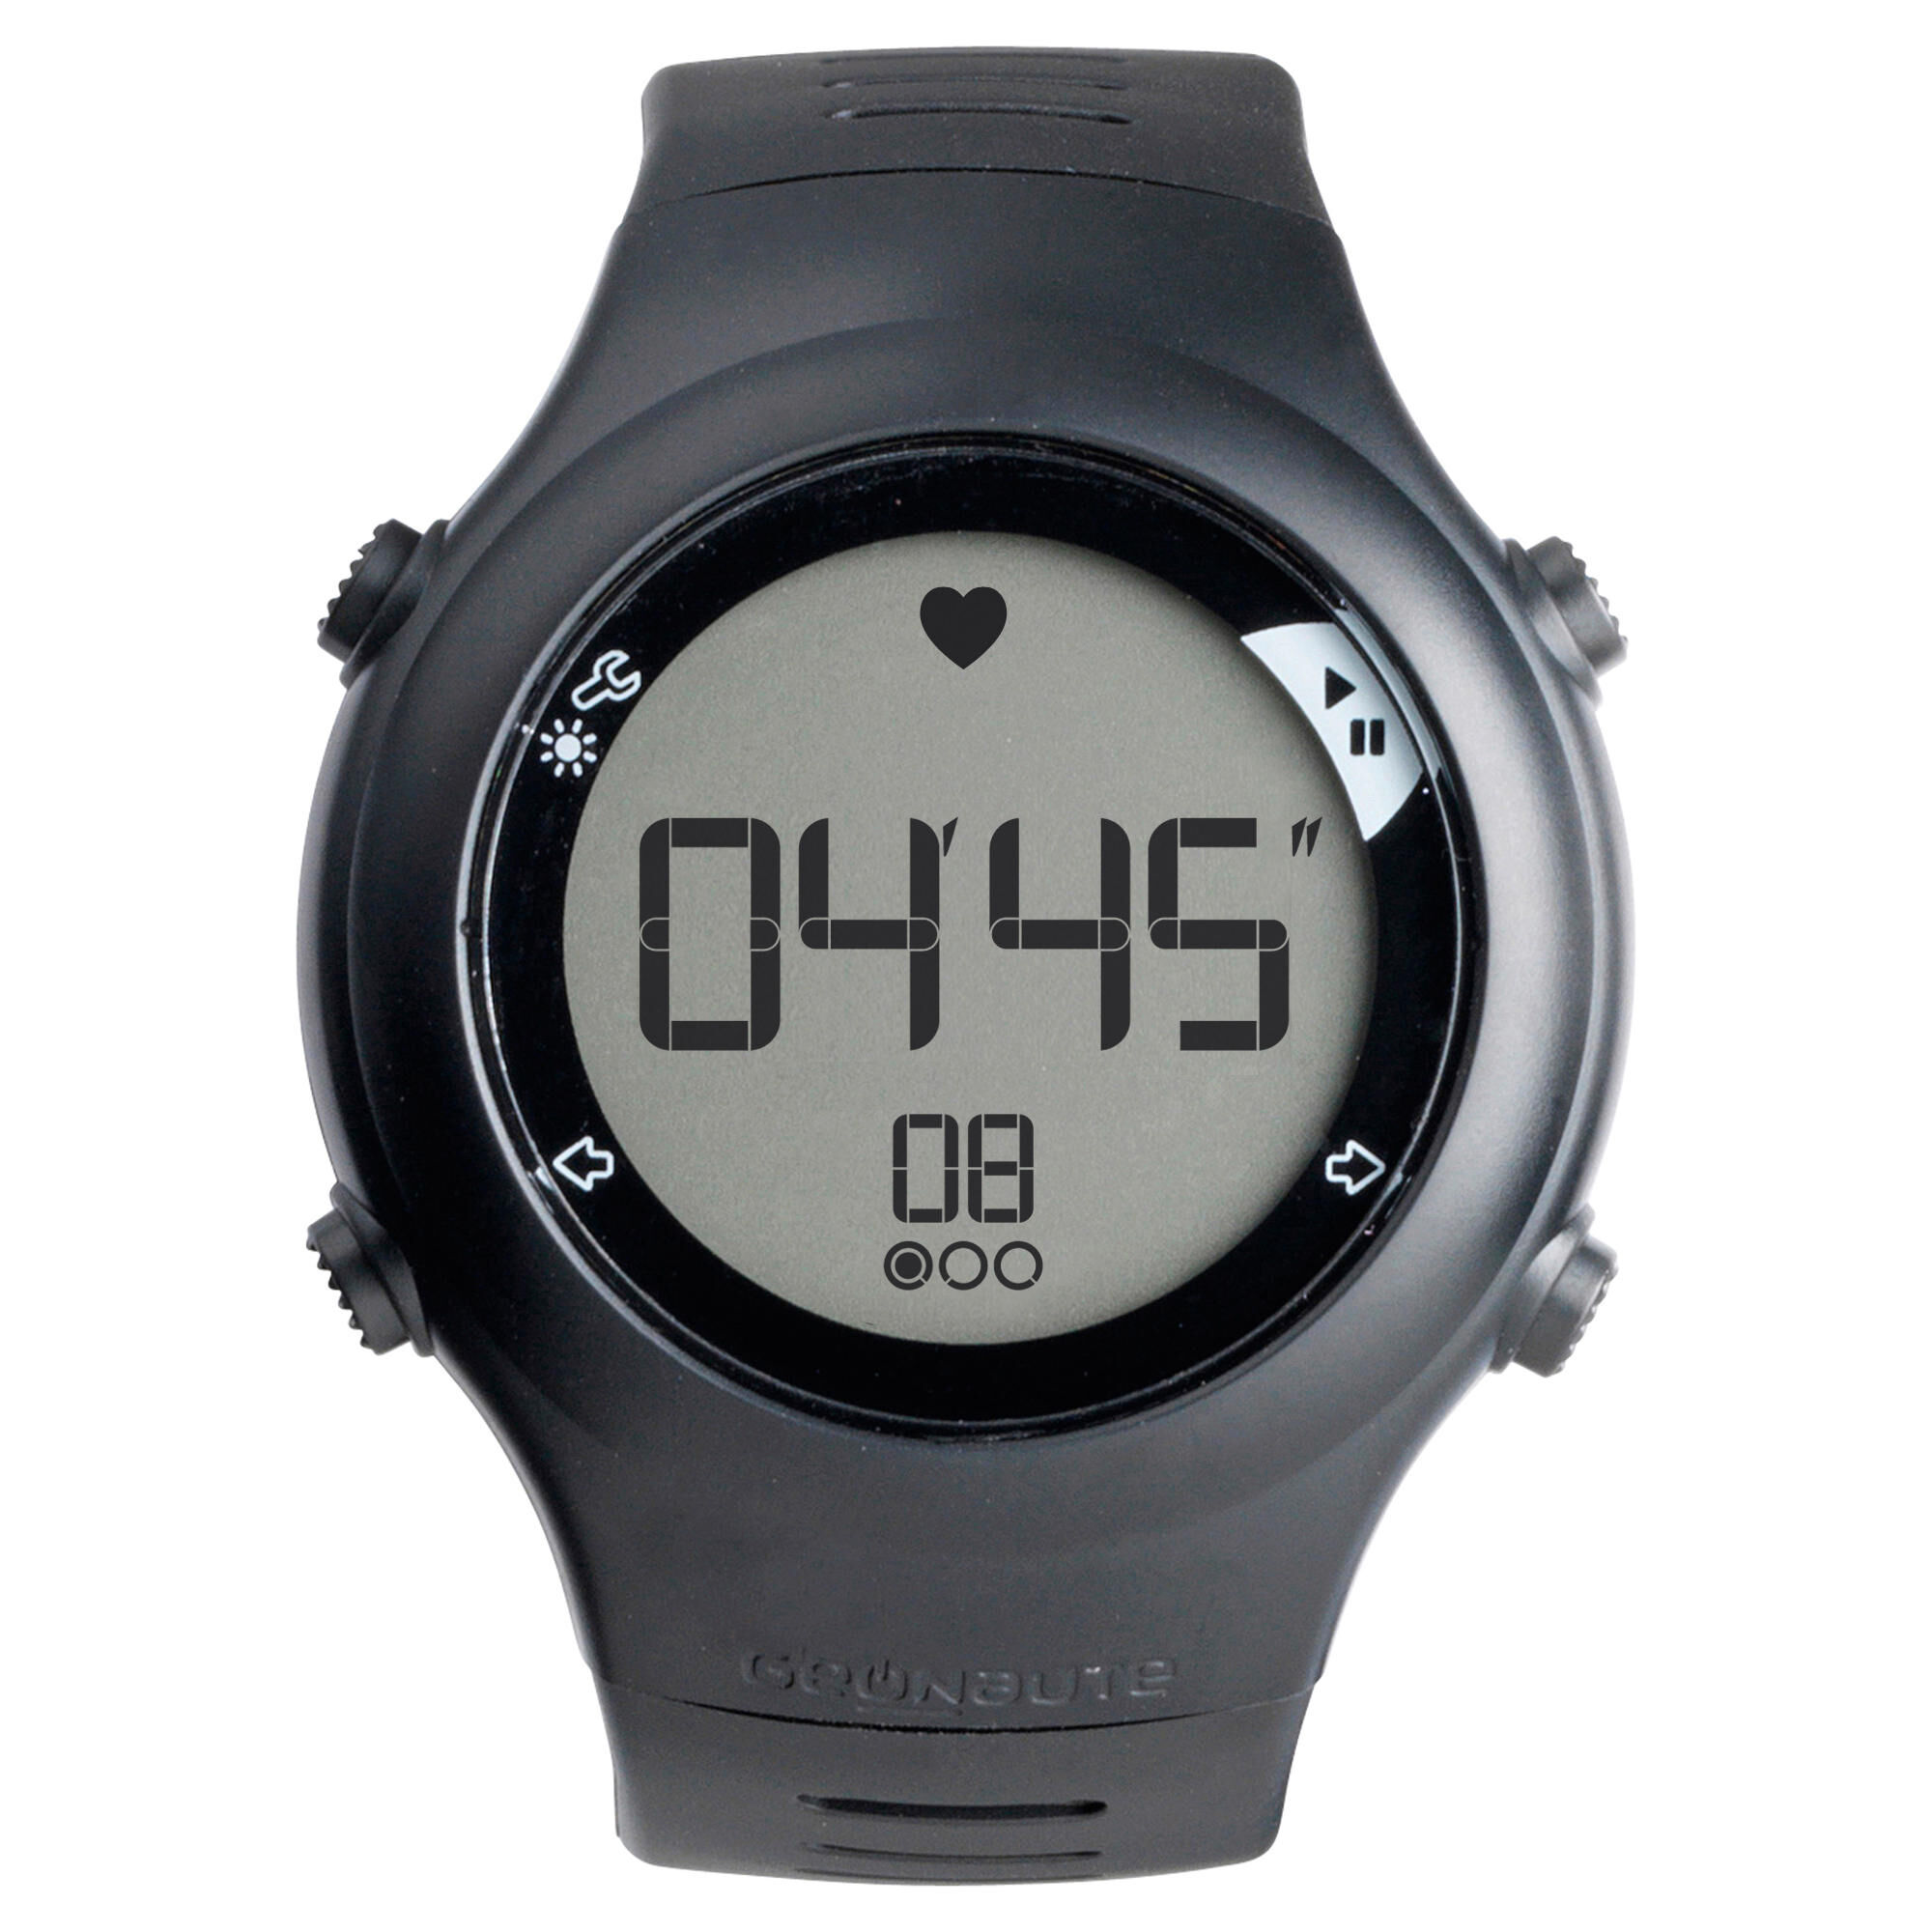 KALENJI ONRHYTHM 110 runner's heart rate monitor watch black